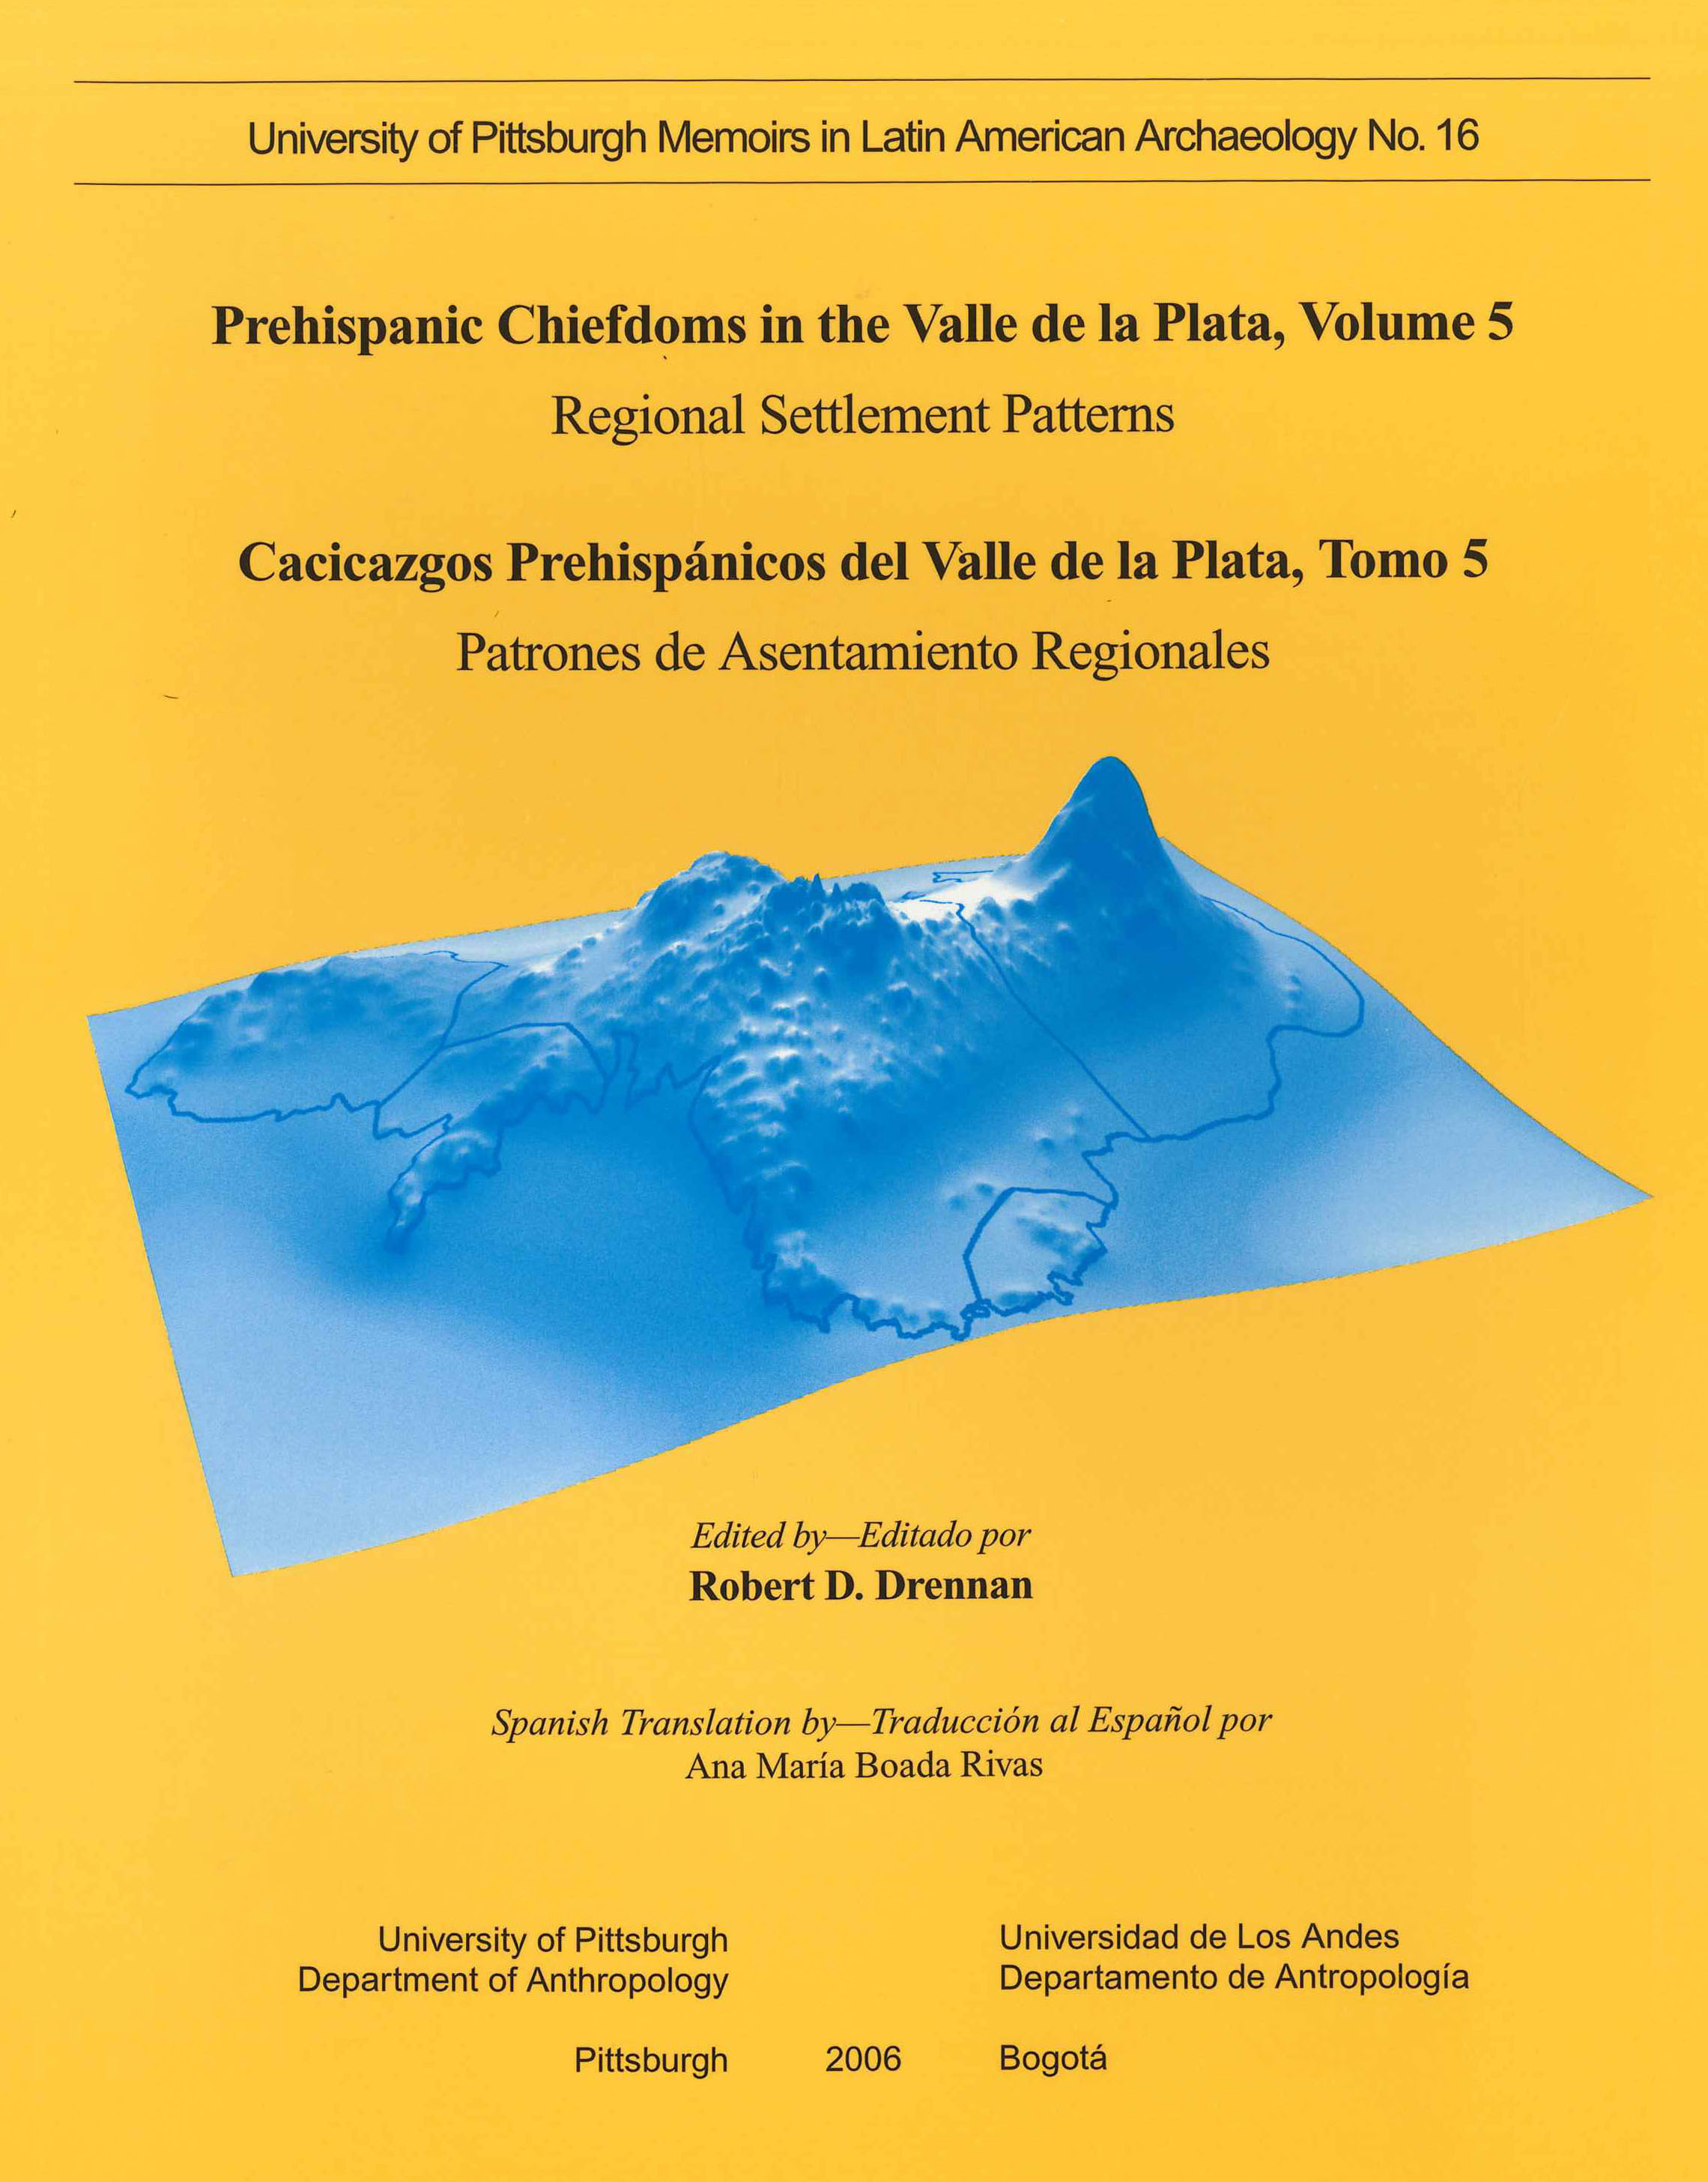 La Plata Chiefdoms, volume 5 cover